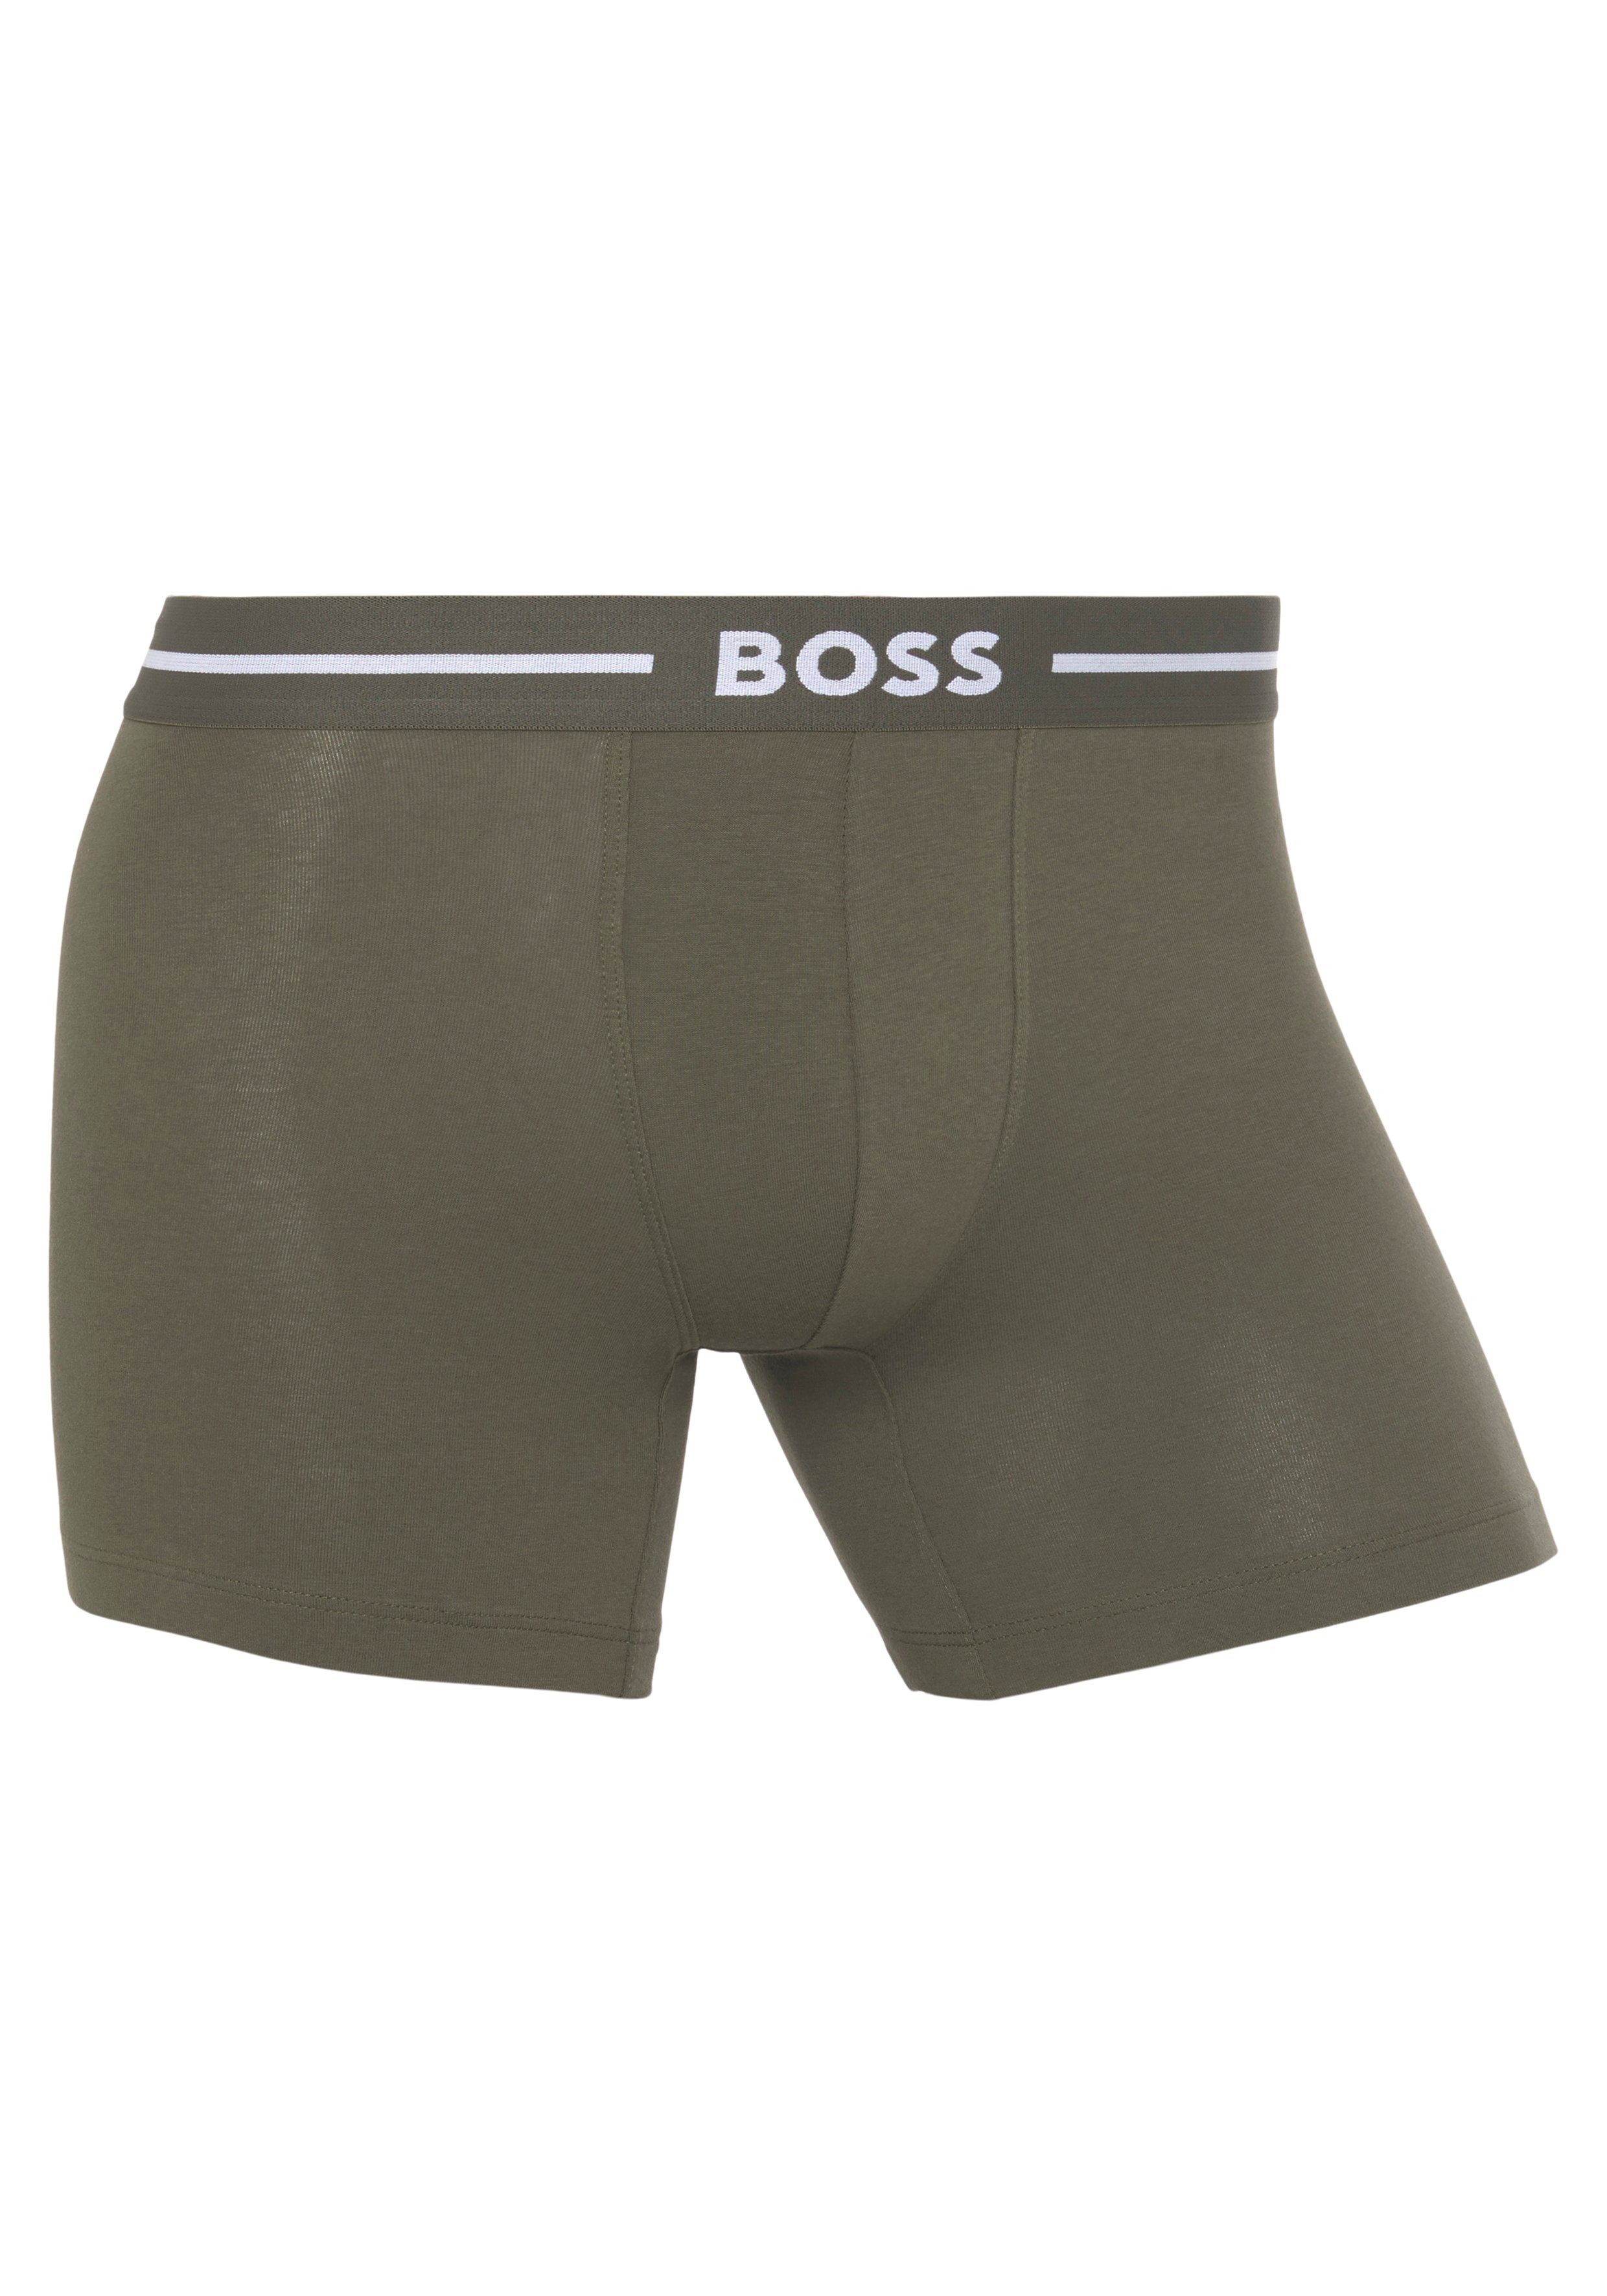 Br Schwarz/Khaki am Bold BOSS Logoschriftzug mit Boxershorts Bund 3P (Packung, 3er)